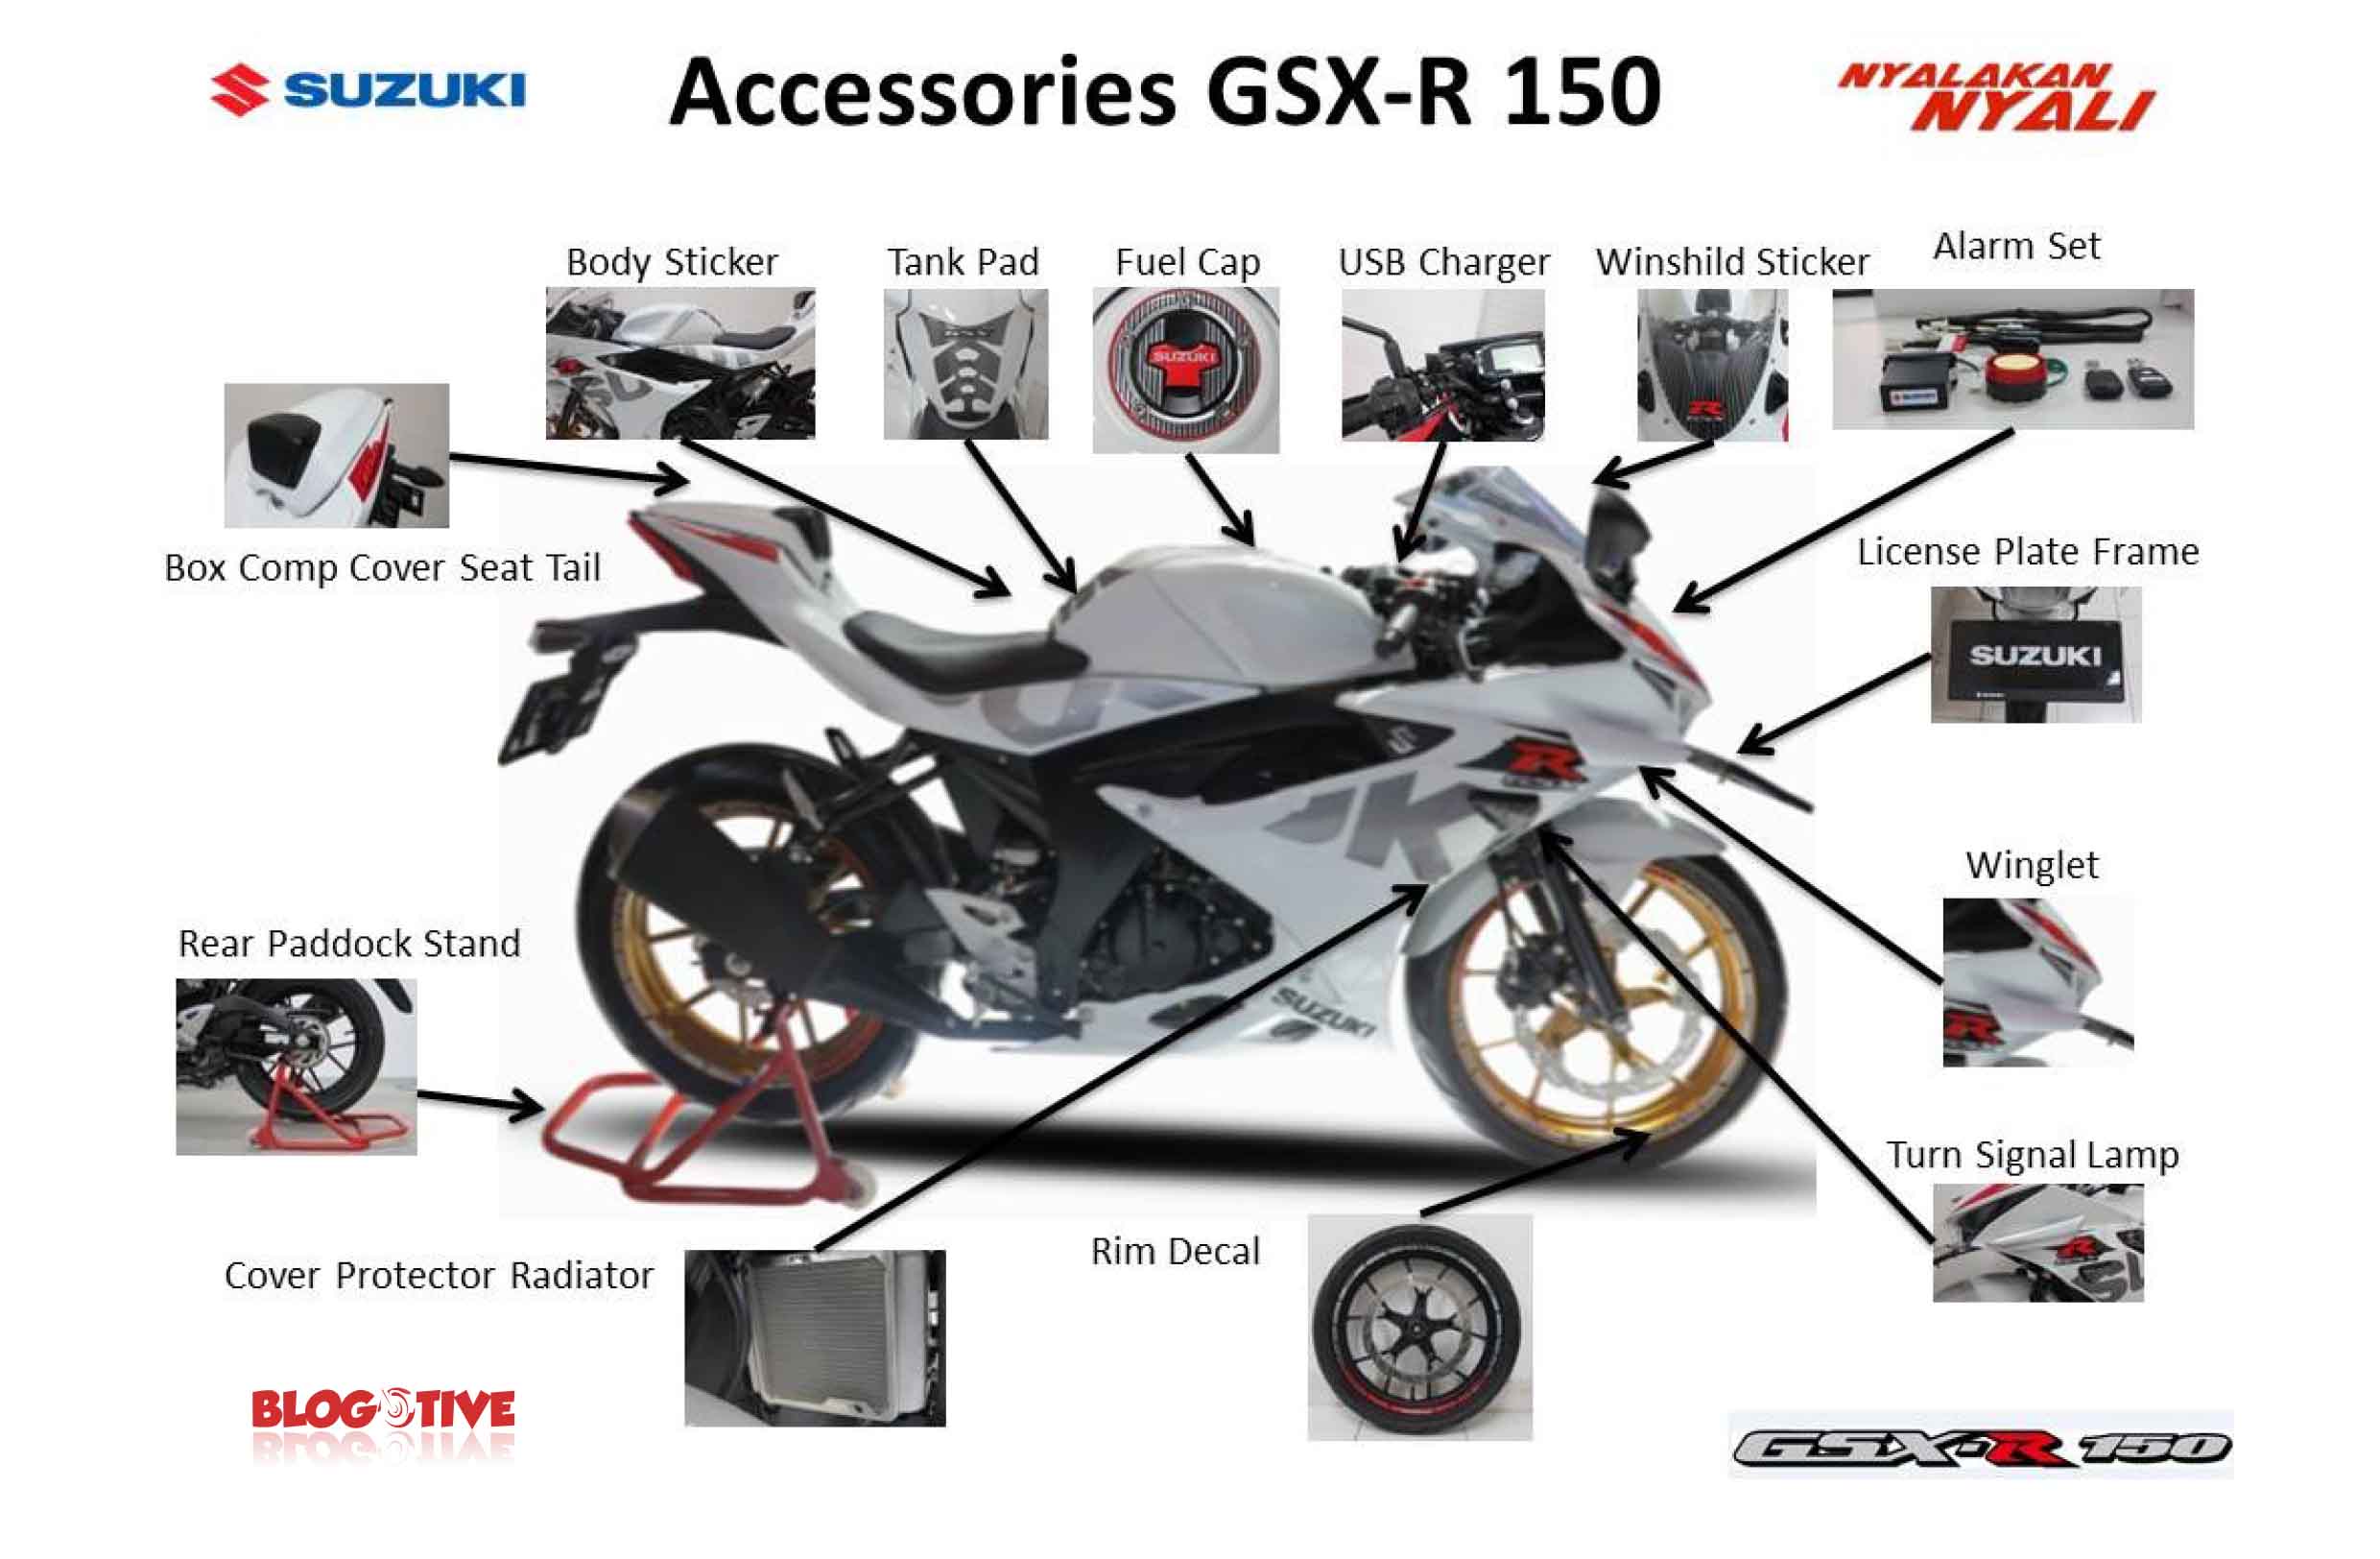 13 Aksesoris resmi Suzuki GSX R150 dan Harganya BlogOtive